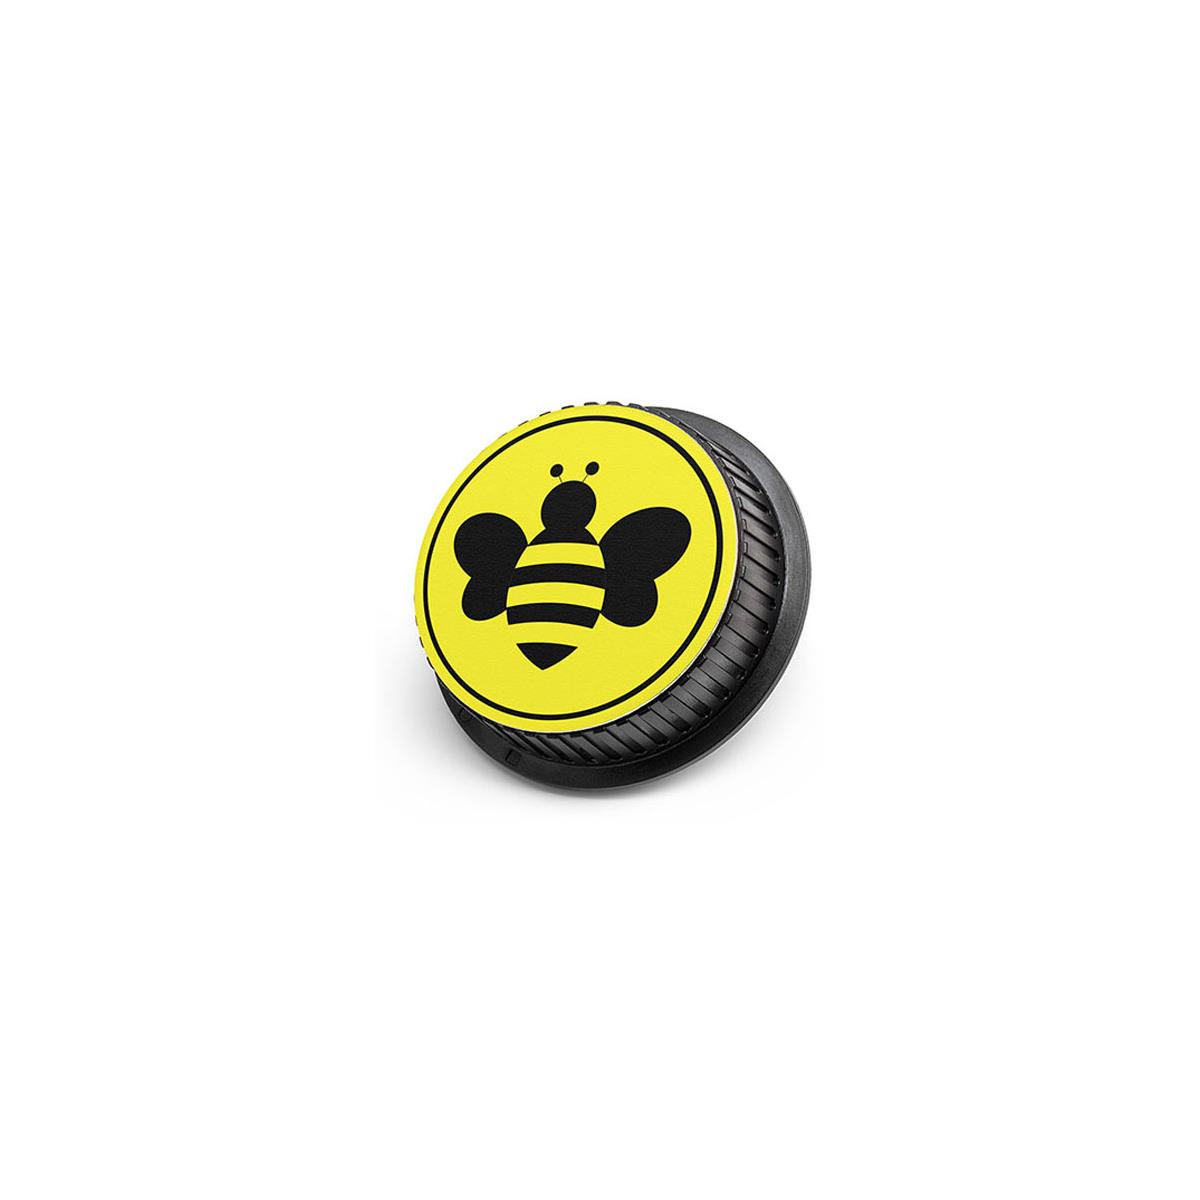 Задняя крышка объектива LenzBuddy для Canon — со значком шмеля (желтая) #52101-04